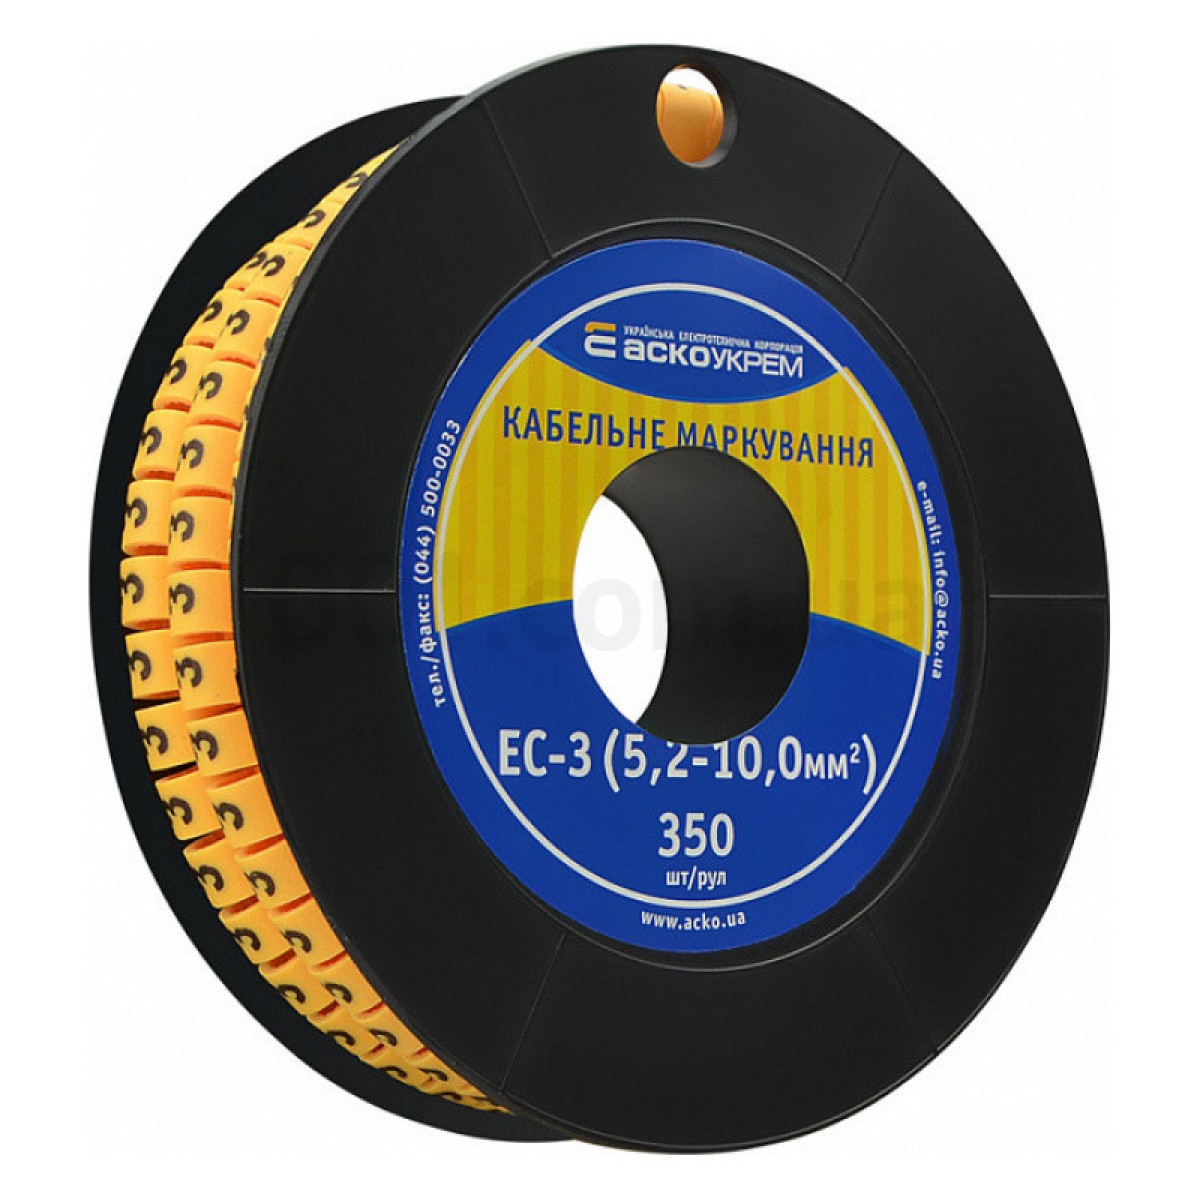 Маркировка EC-3 для кабеля 5,2-10,0 мм² символ «3» (рулон 250 шт.), АСКО-УКРЕМ 98_98.jpg - фото 1